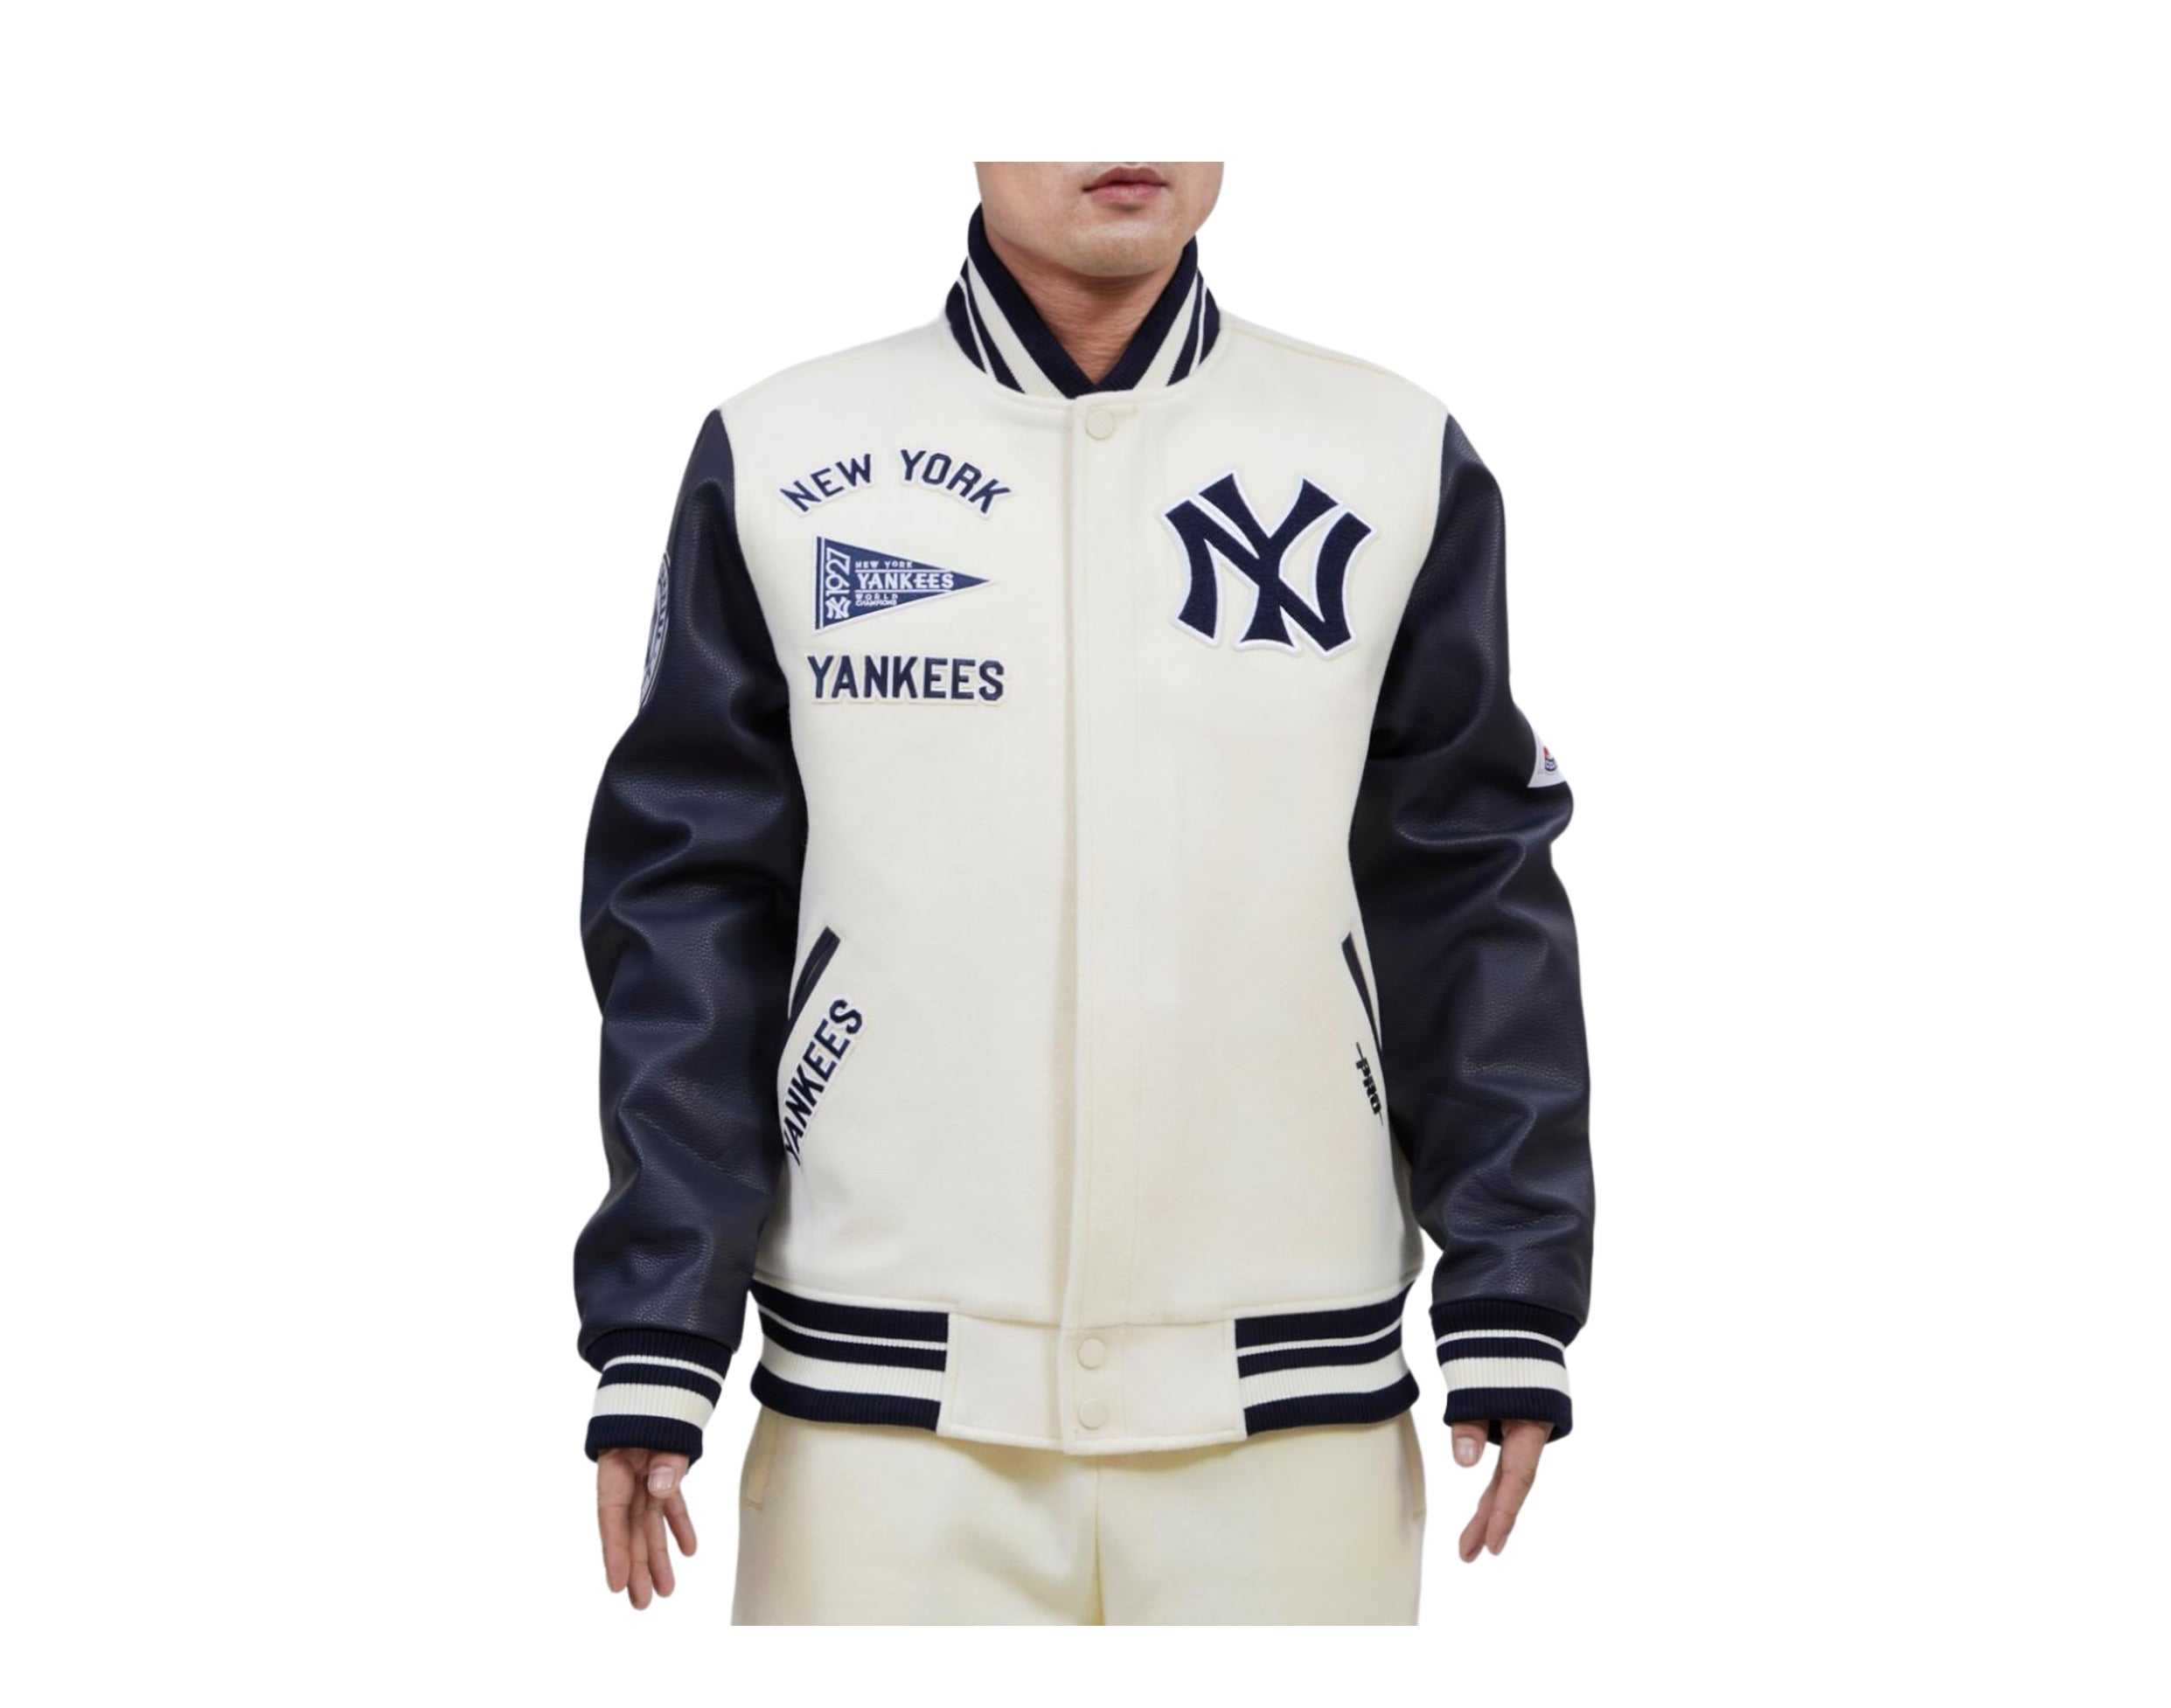 Baltimore Orioles MLB Varsity Jacket - MLB Varsity Jacket - Clubs Varsity, XL